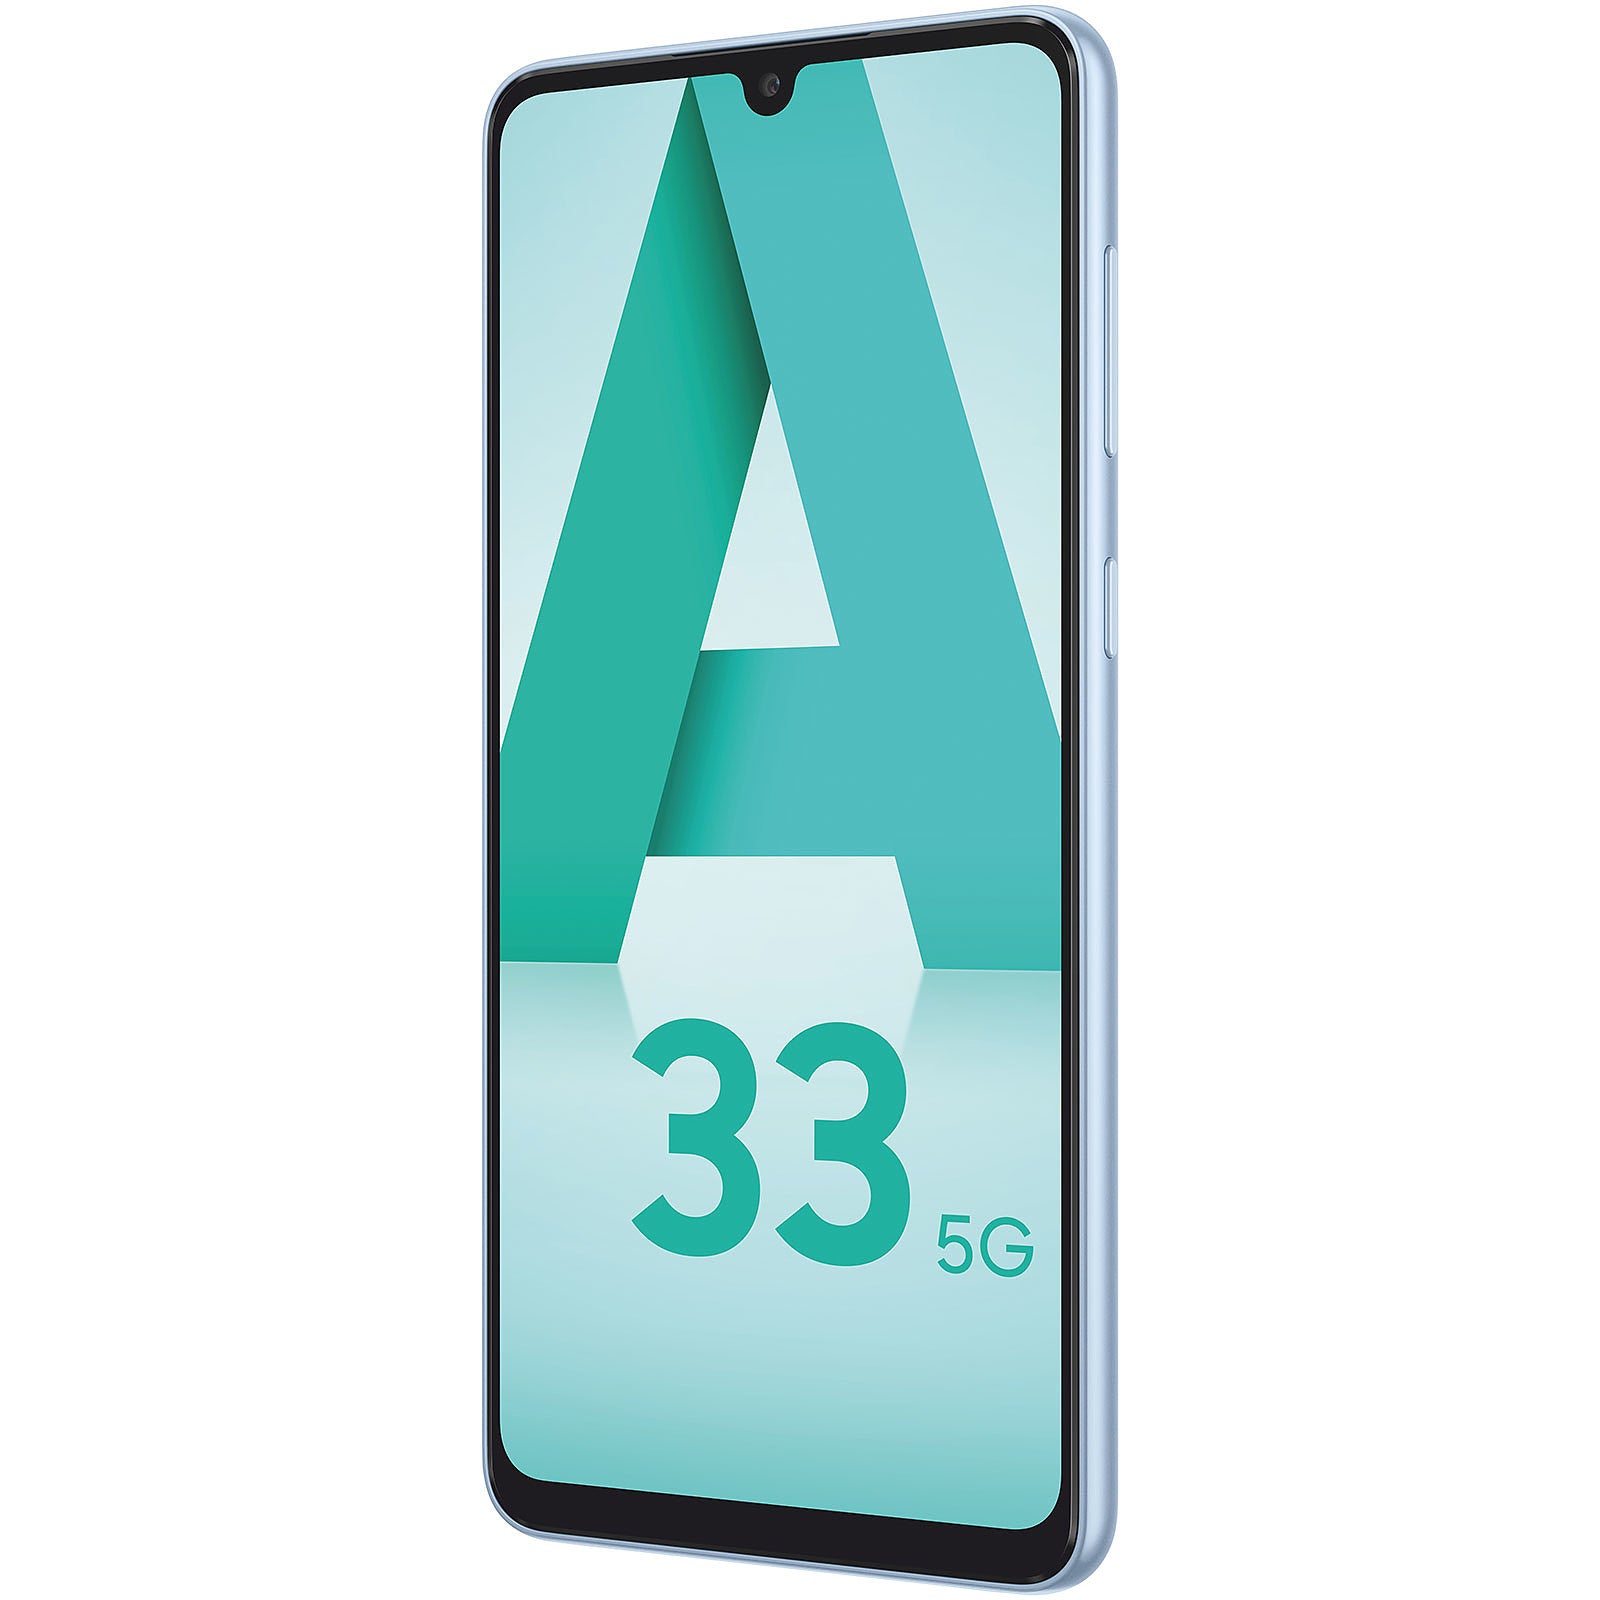 Samsung Galaxy A33 5G Octa-Core 6.4" Super AMOLED Display 6GB RAM 128GB ROM 5000mAh Battery (Blue)